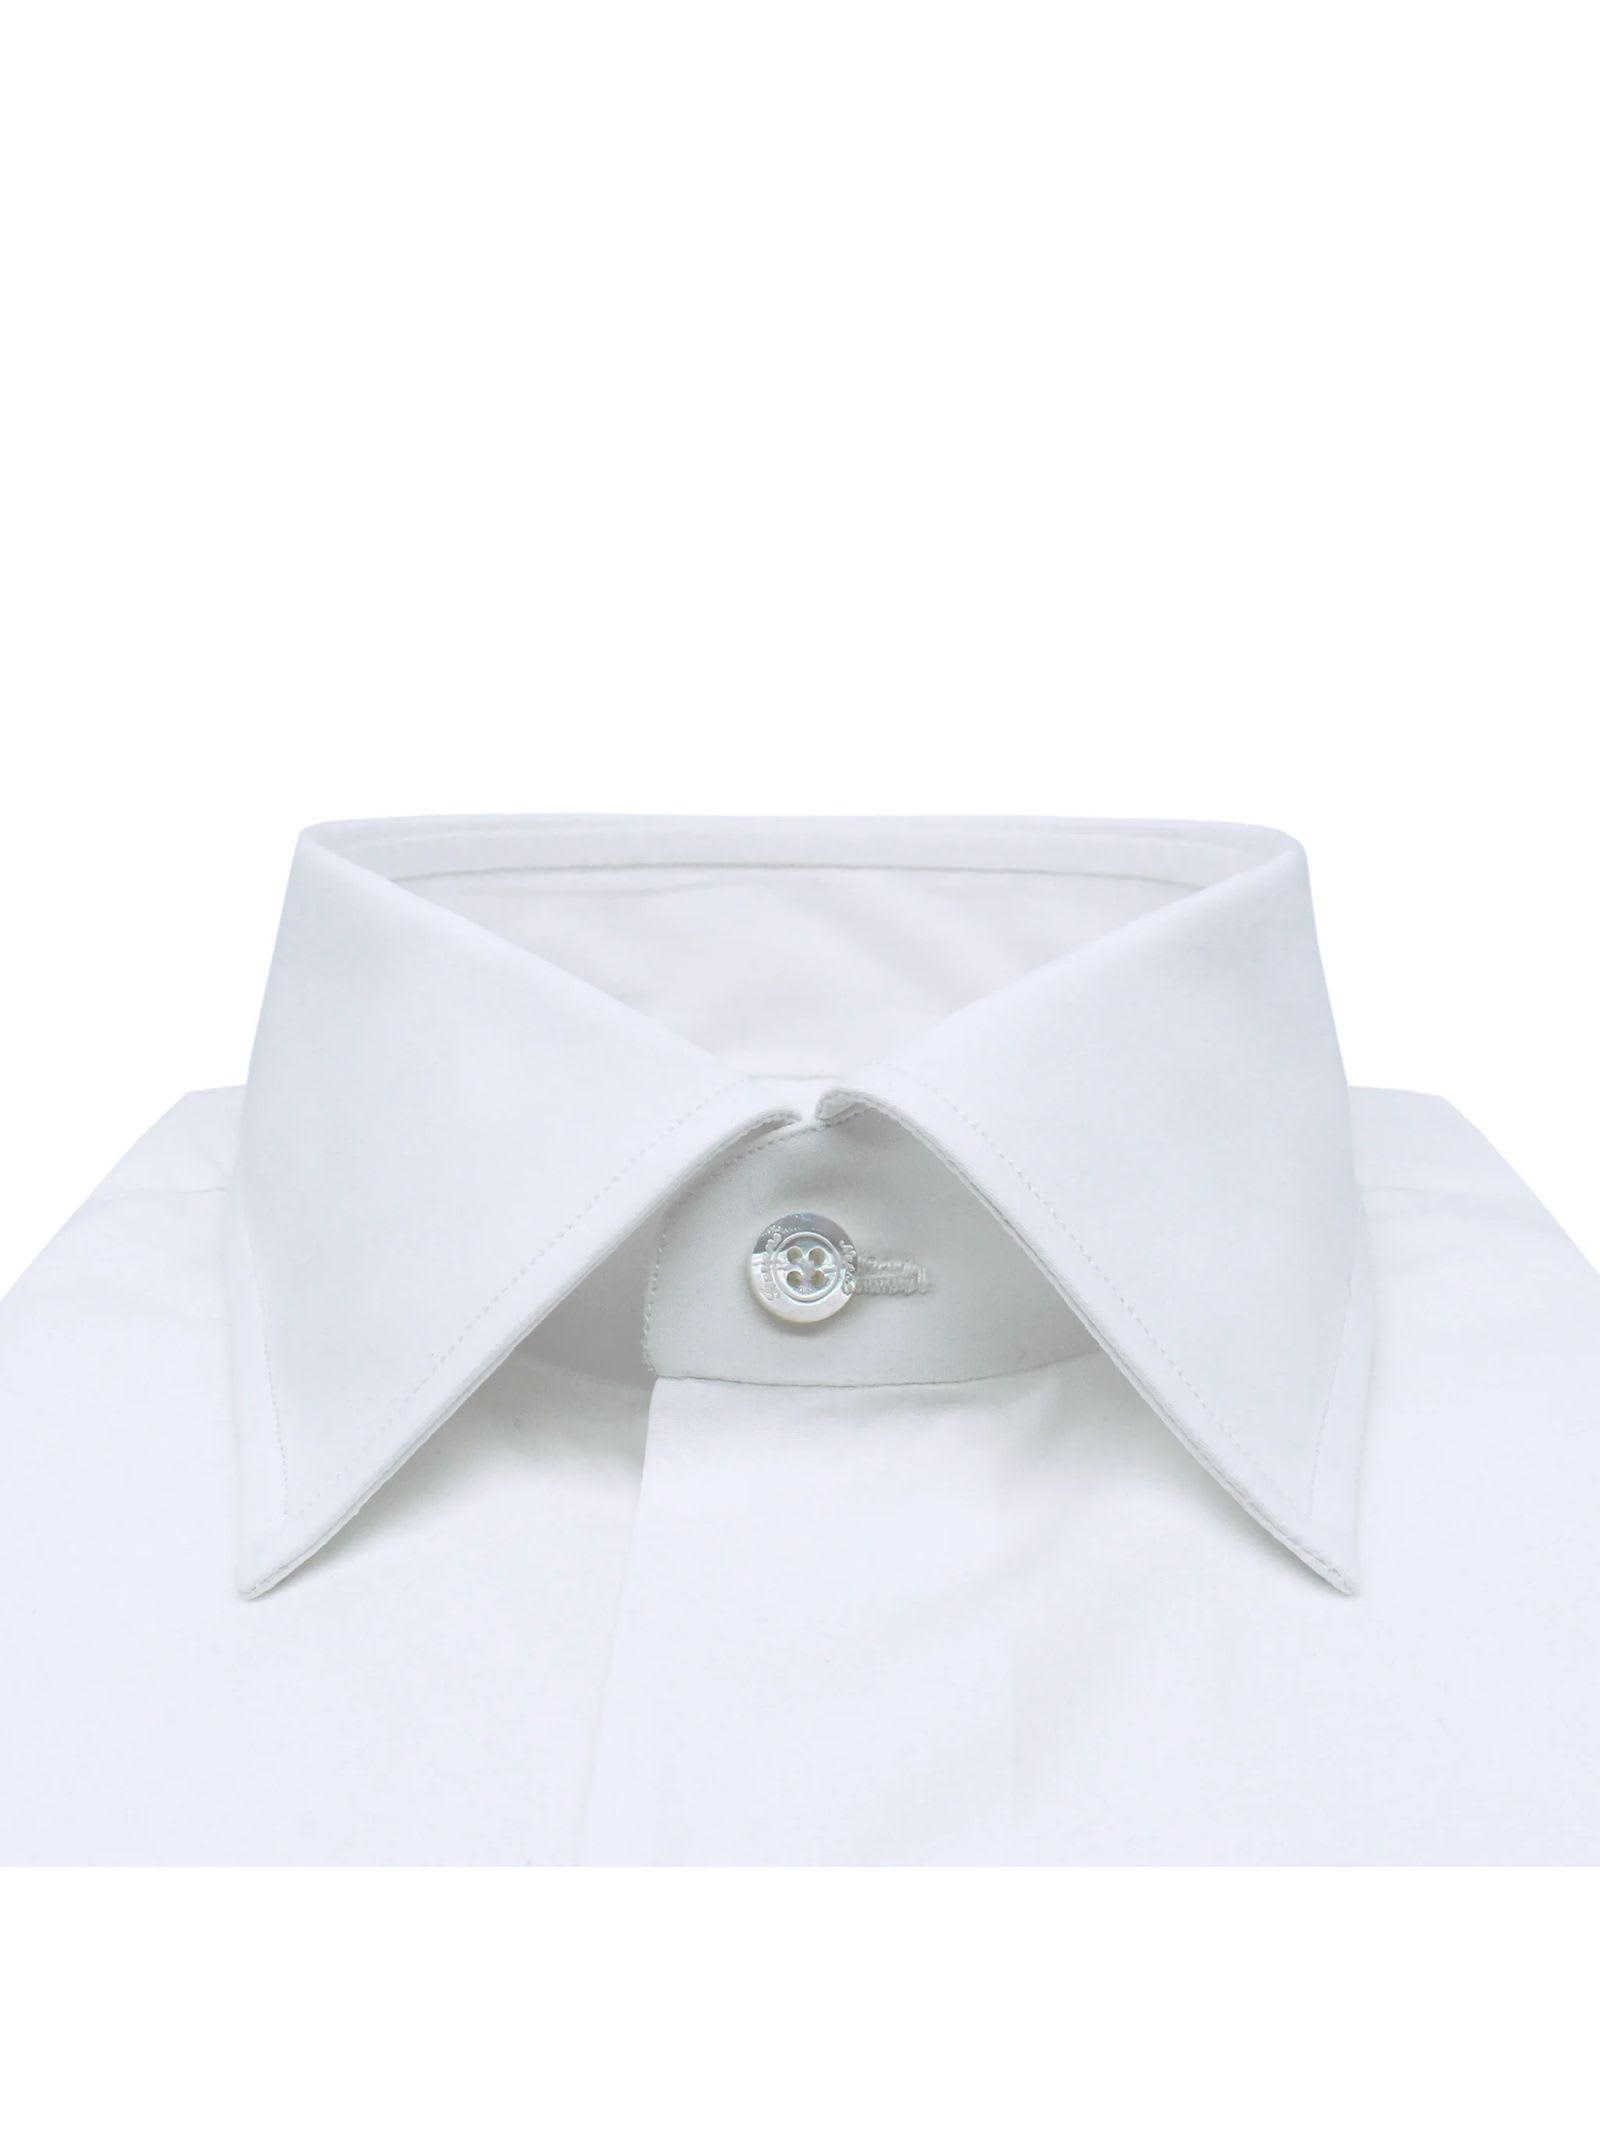 Shop Finamore White Cotton Shirt